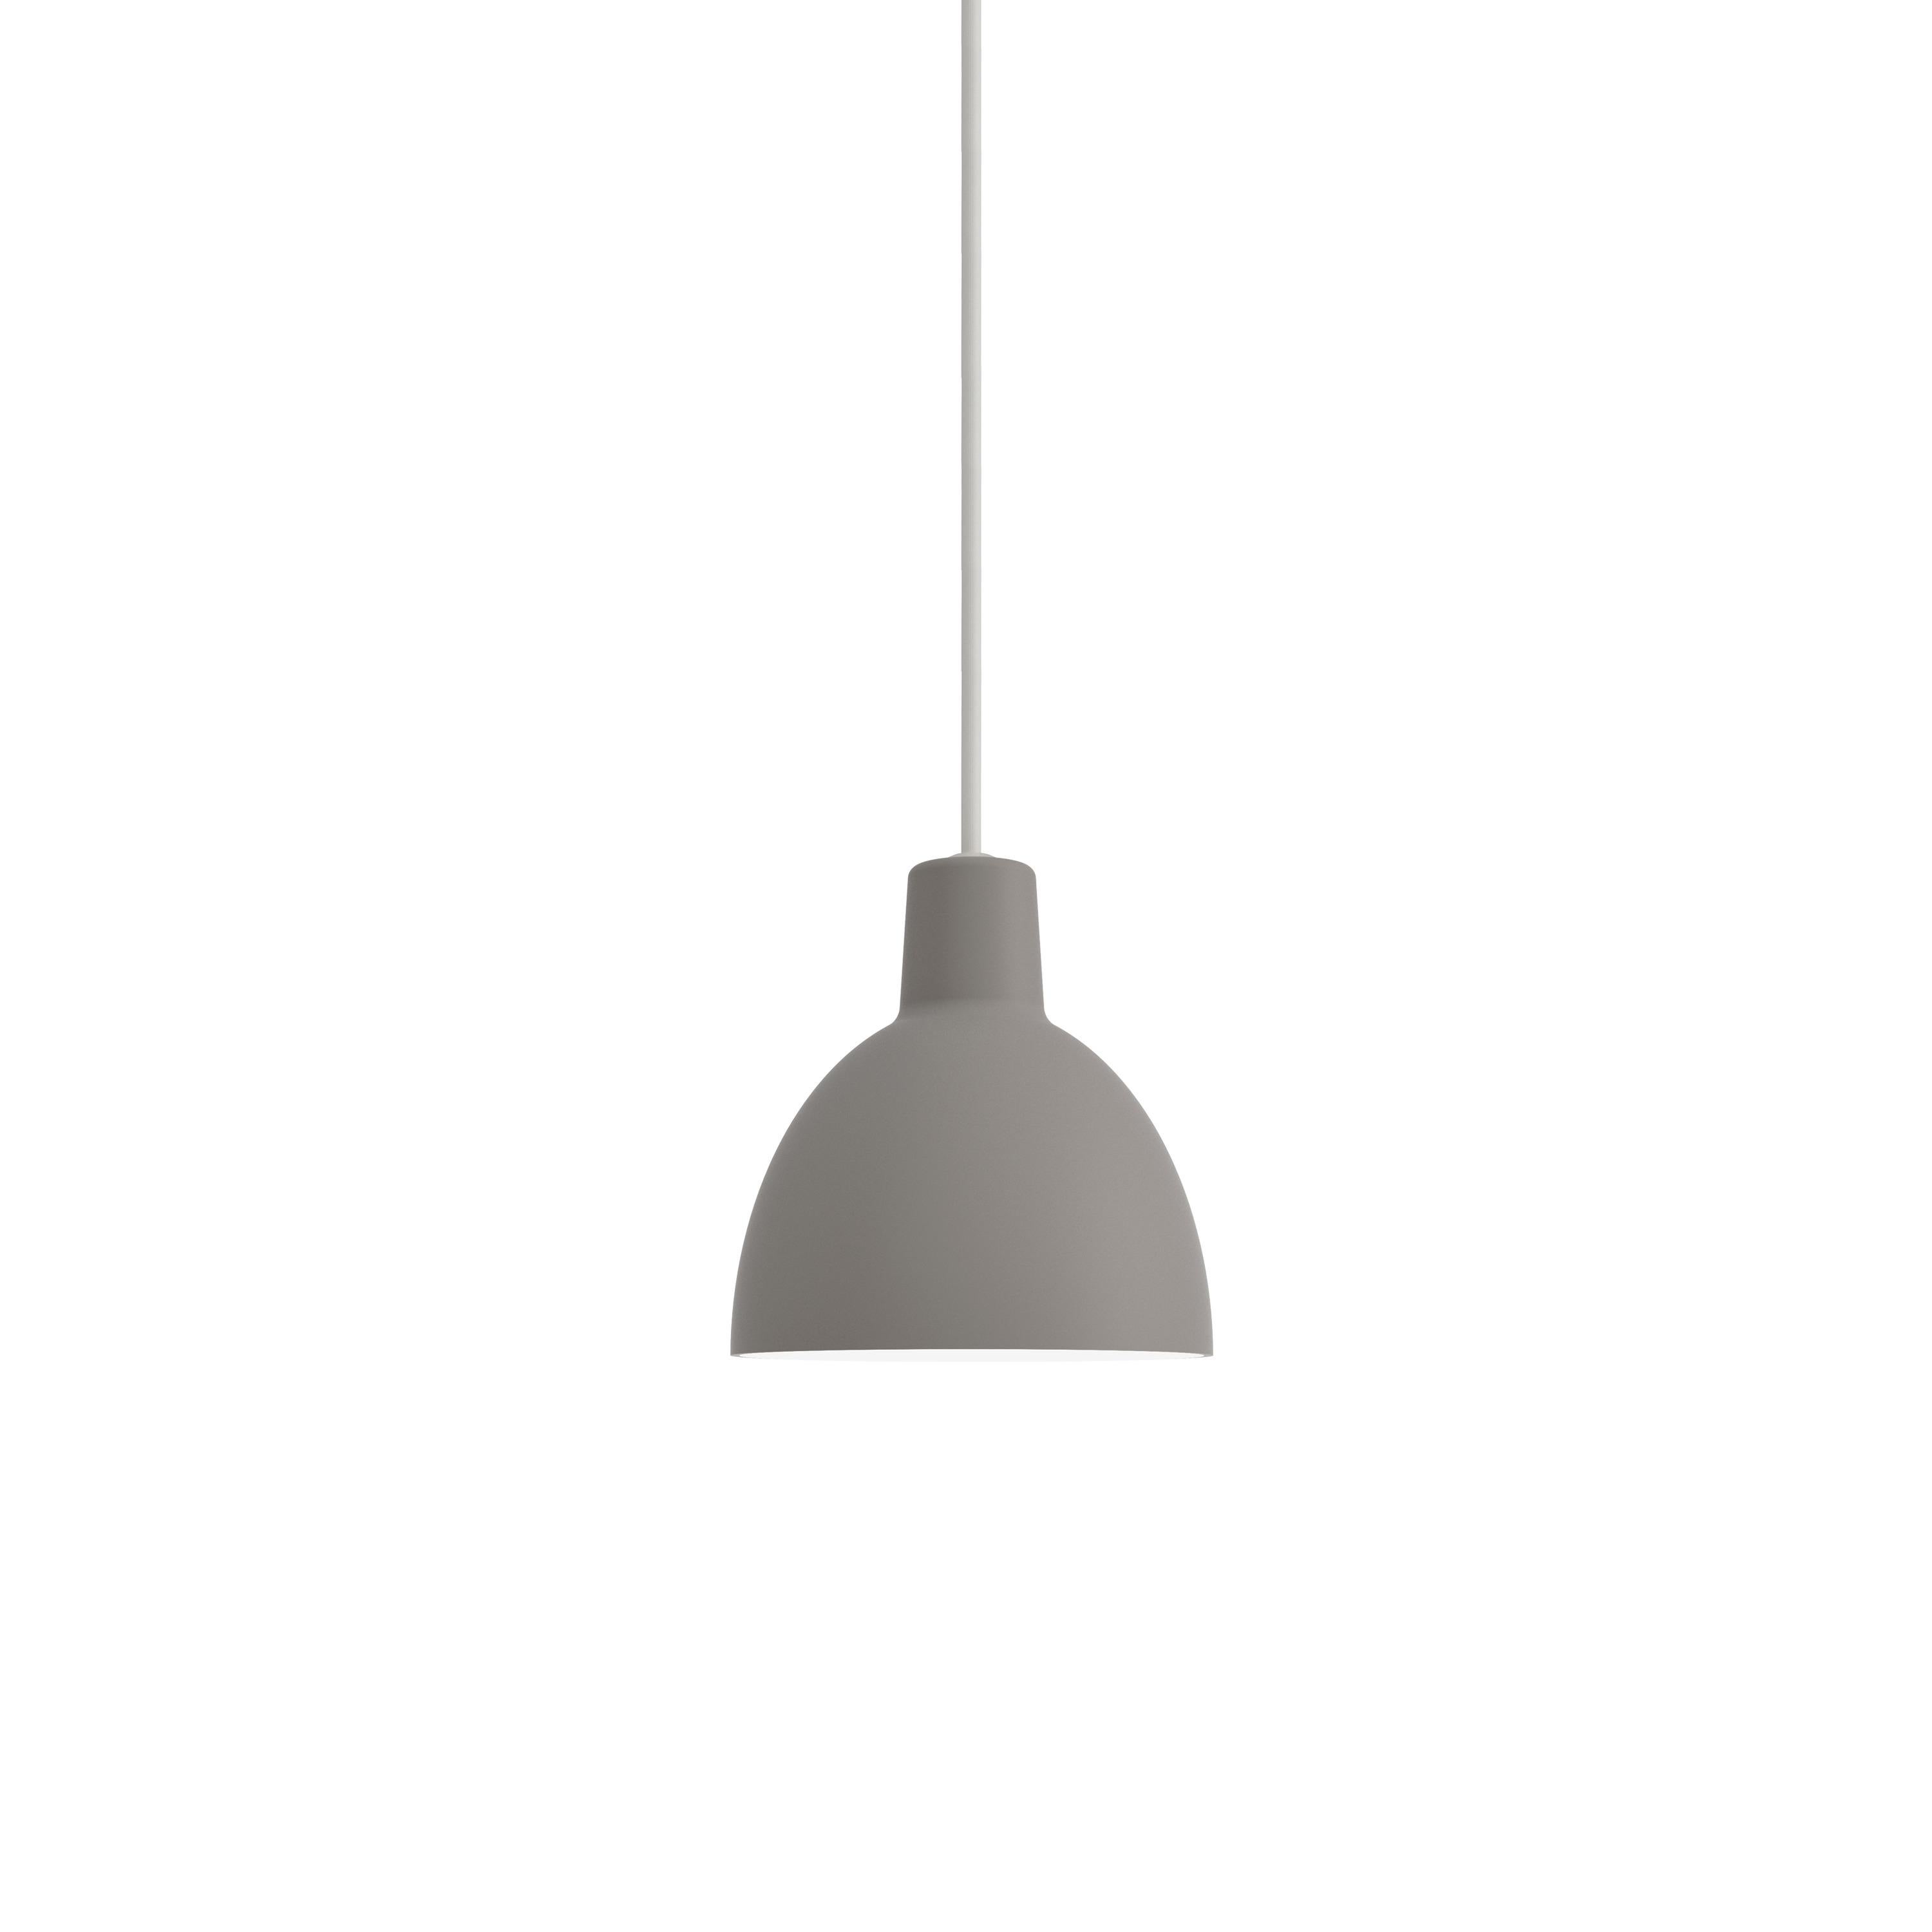 For Sale: Gray (toldbod grey.jpg) Toldbod 120 Pendant Lamp by Louis Poulsen